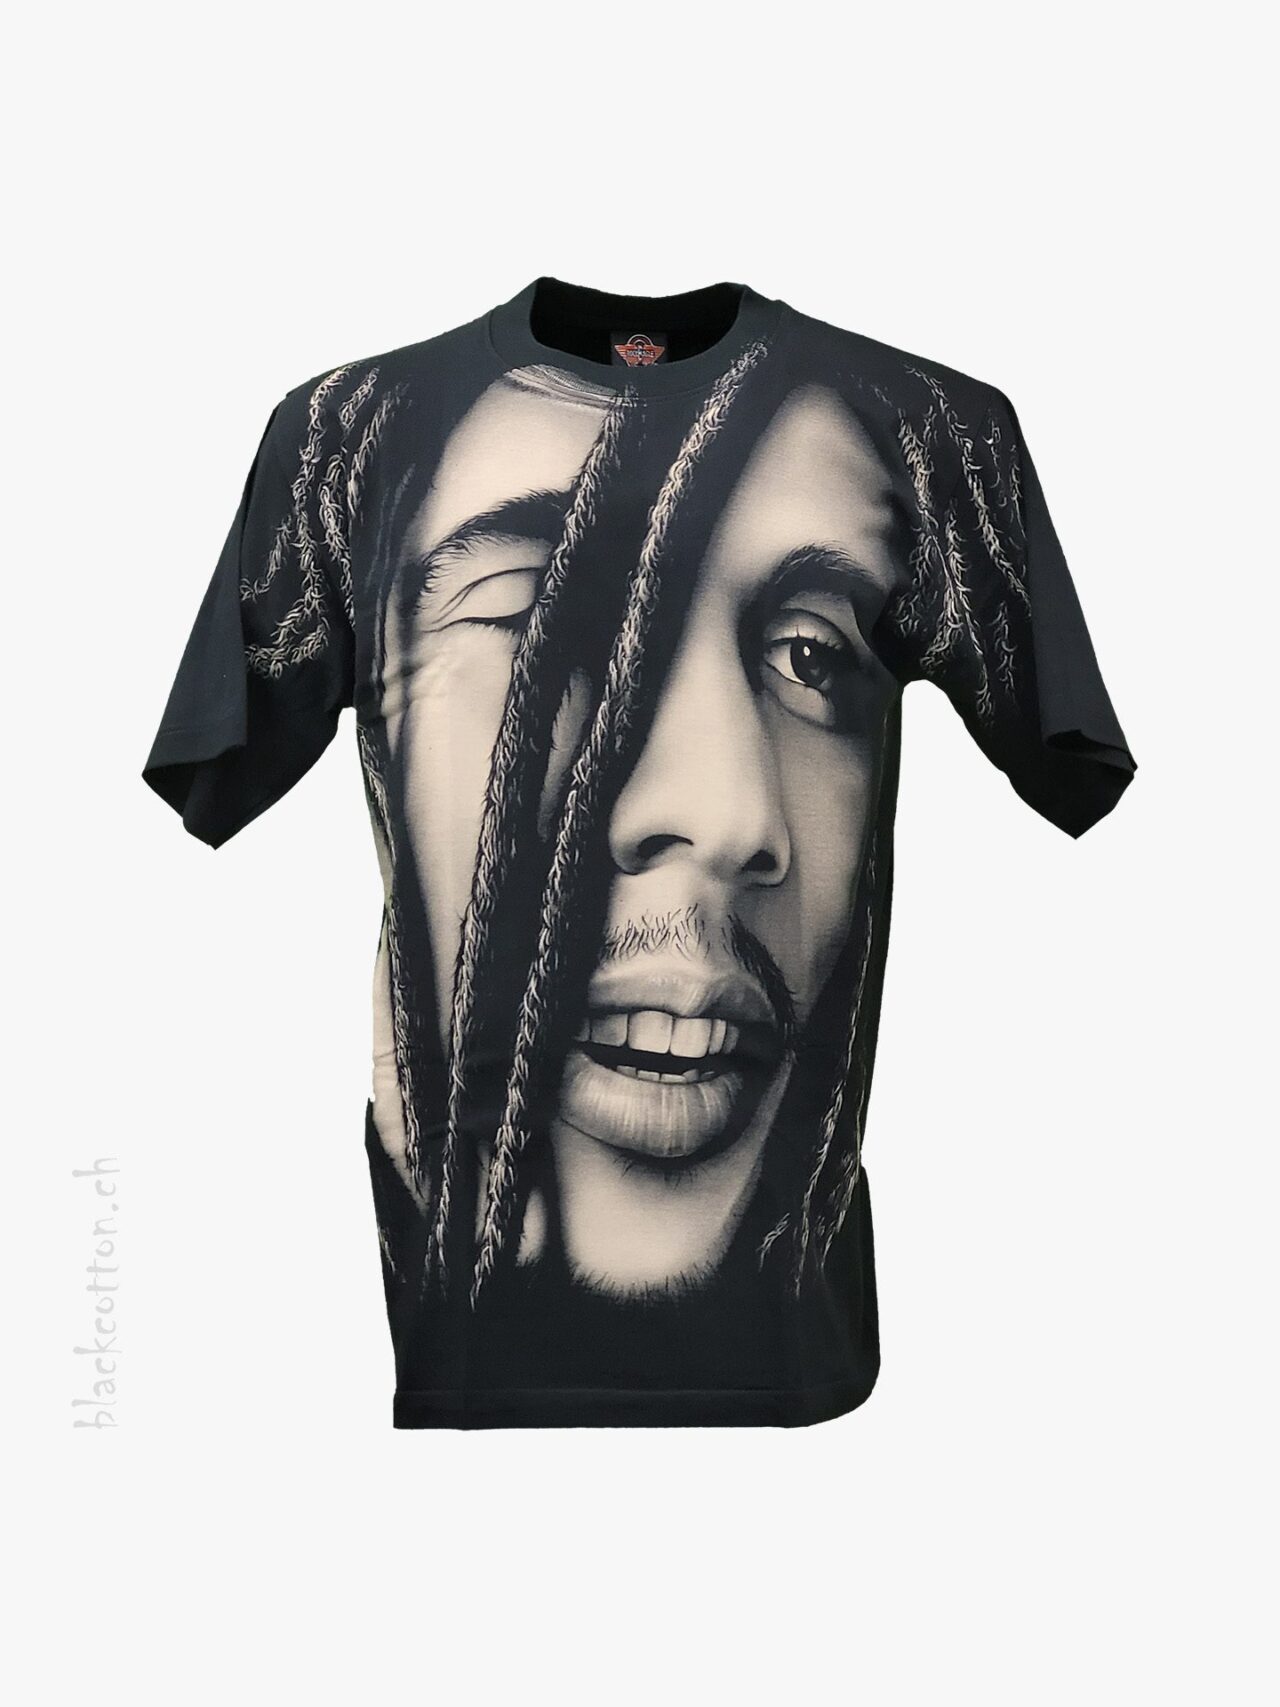 Bob Marley - Rastaman T-Shirt